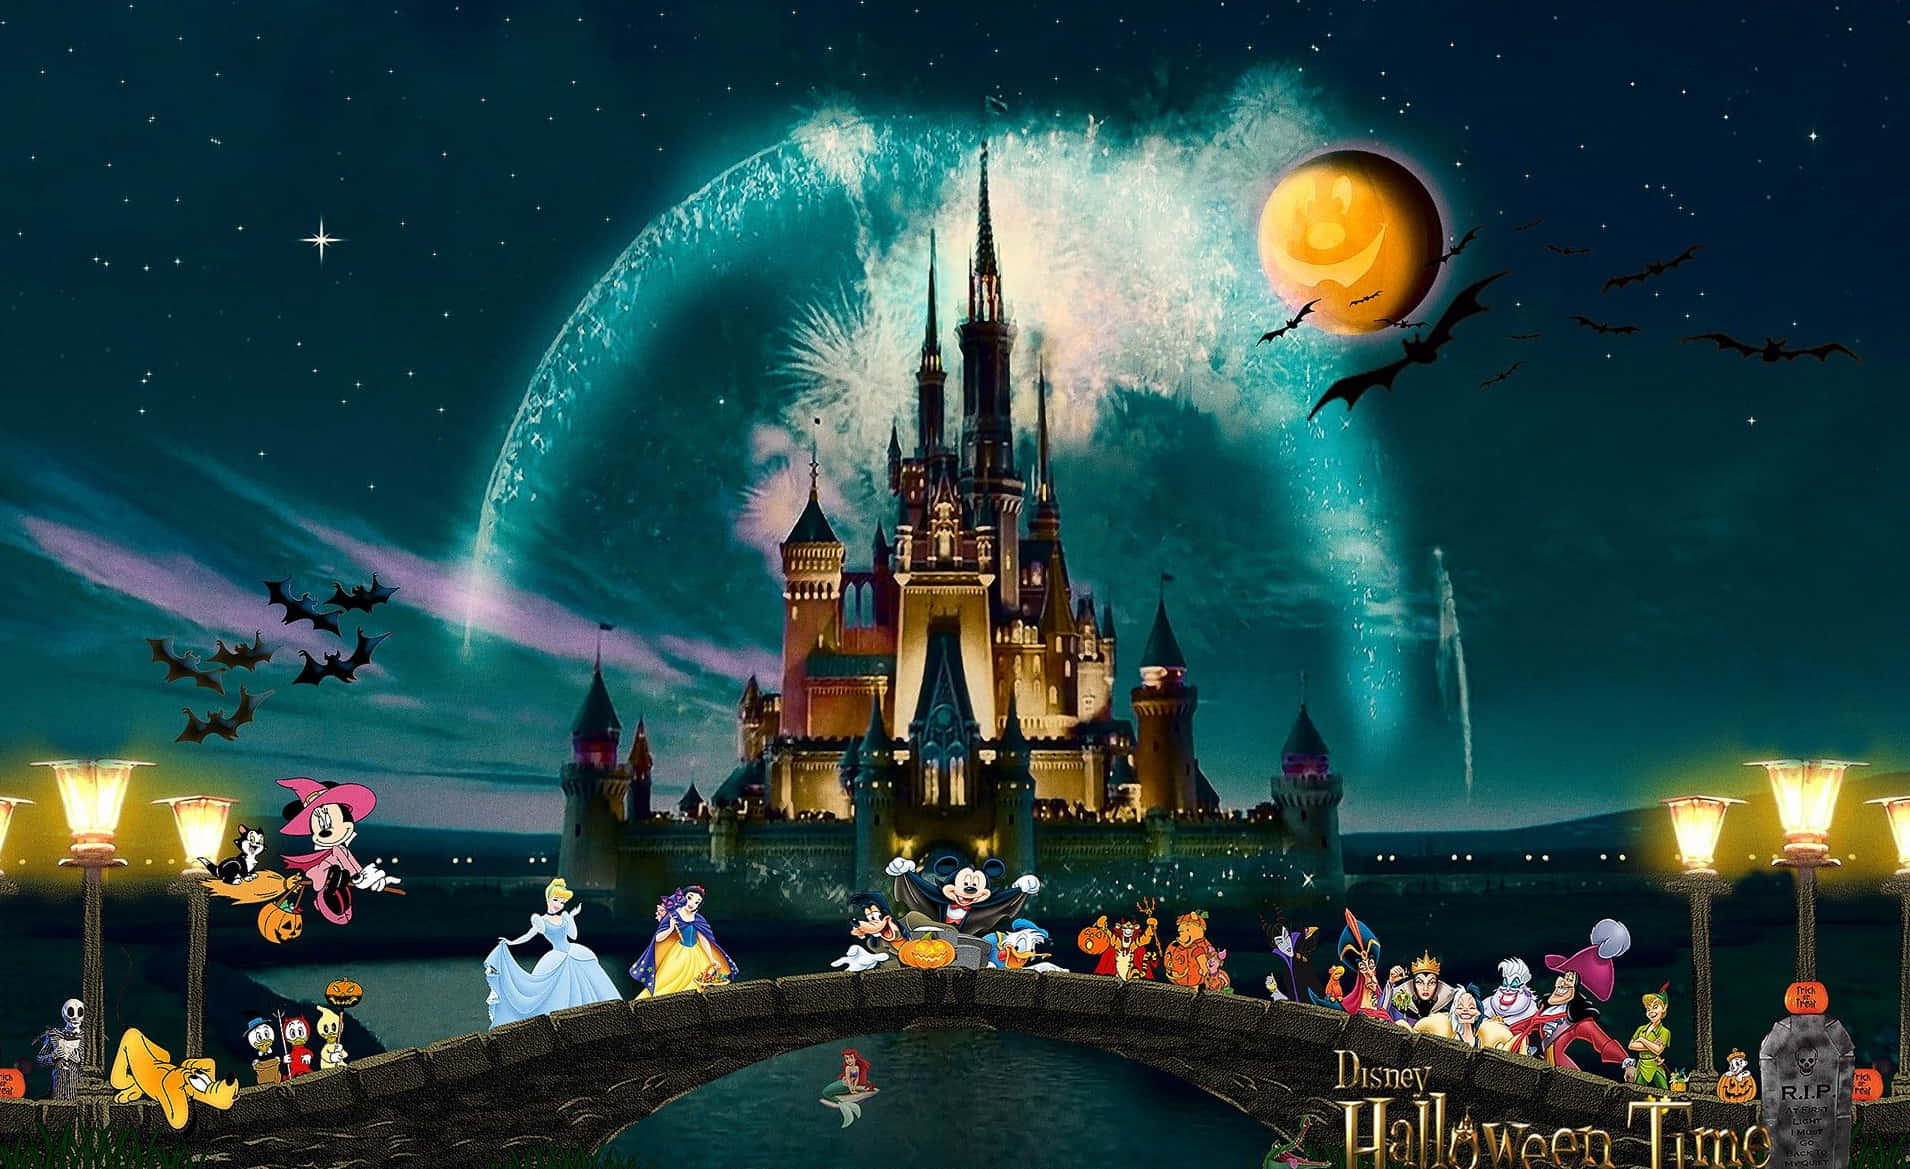 Disney Halloween Wallpaper featuring Mickey, Minnie, and villains